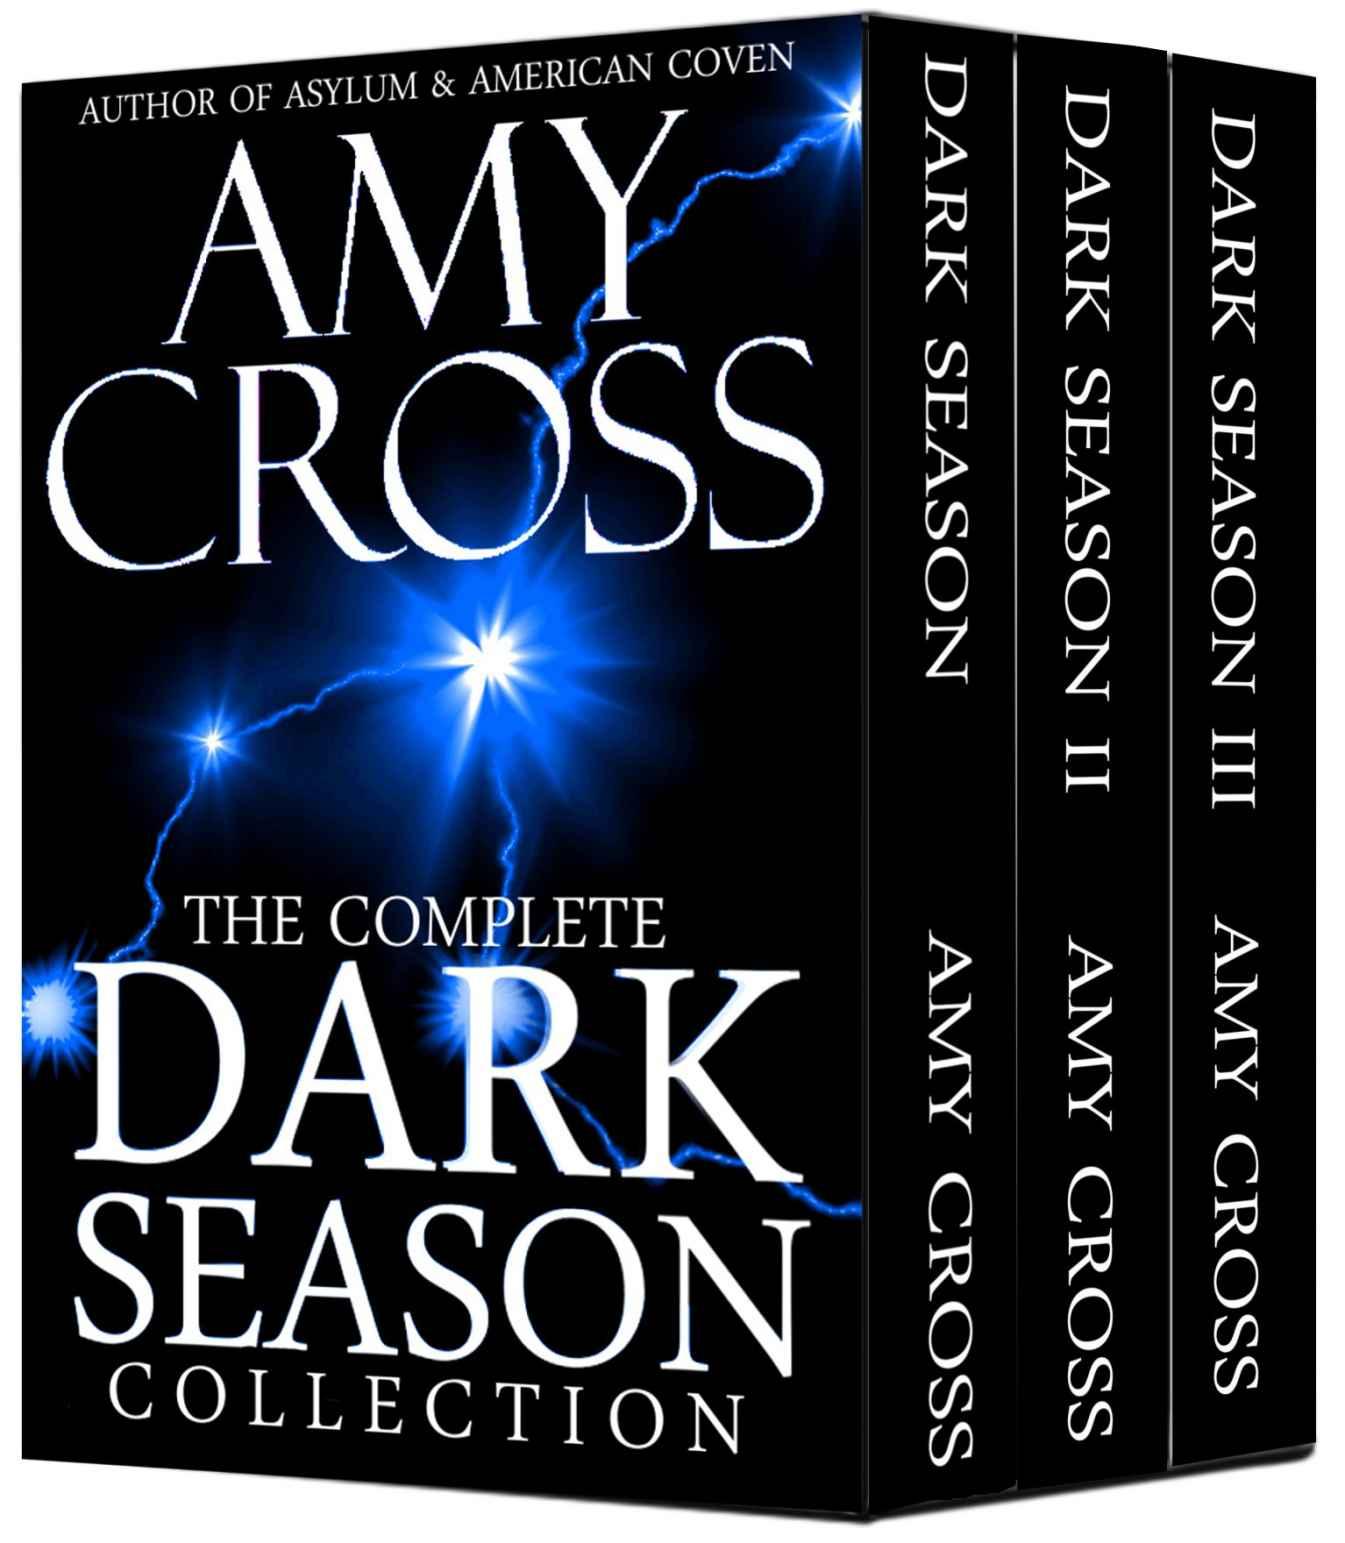 Dark Season: The Complete Box Set by Amy Cross